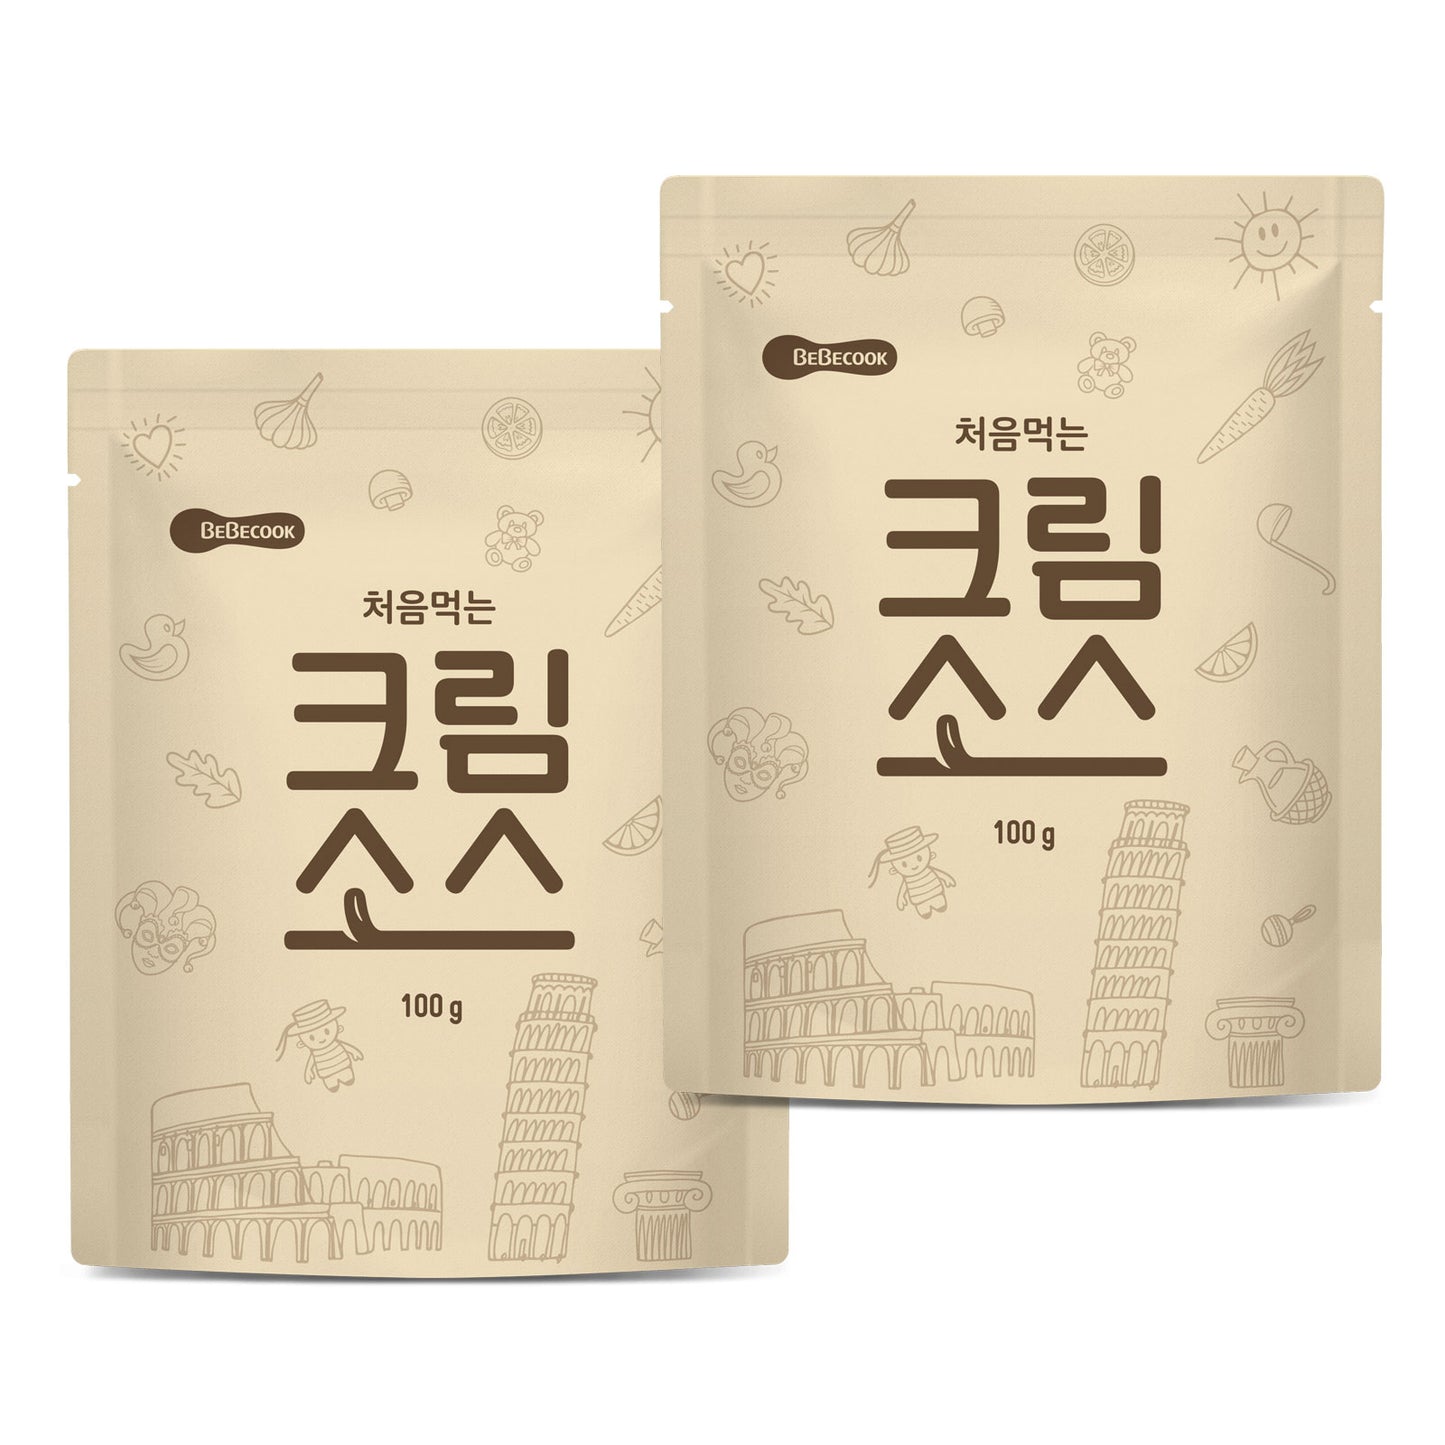 BeBecook - Junior's First Yummy Cream Sauce (100g x 2)